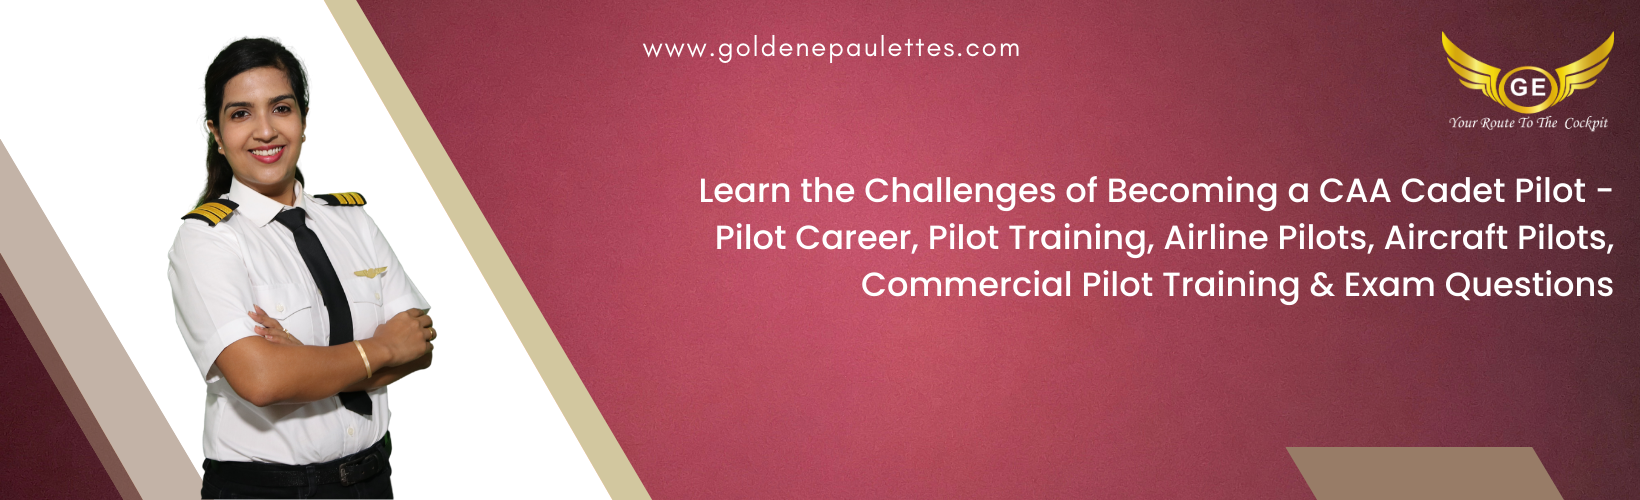 Challenges of Being a CAA Cadet Pilot